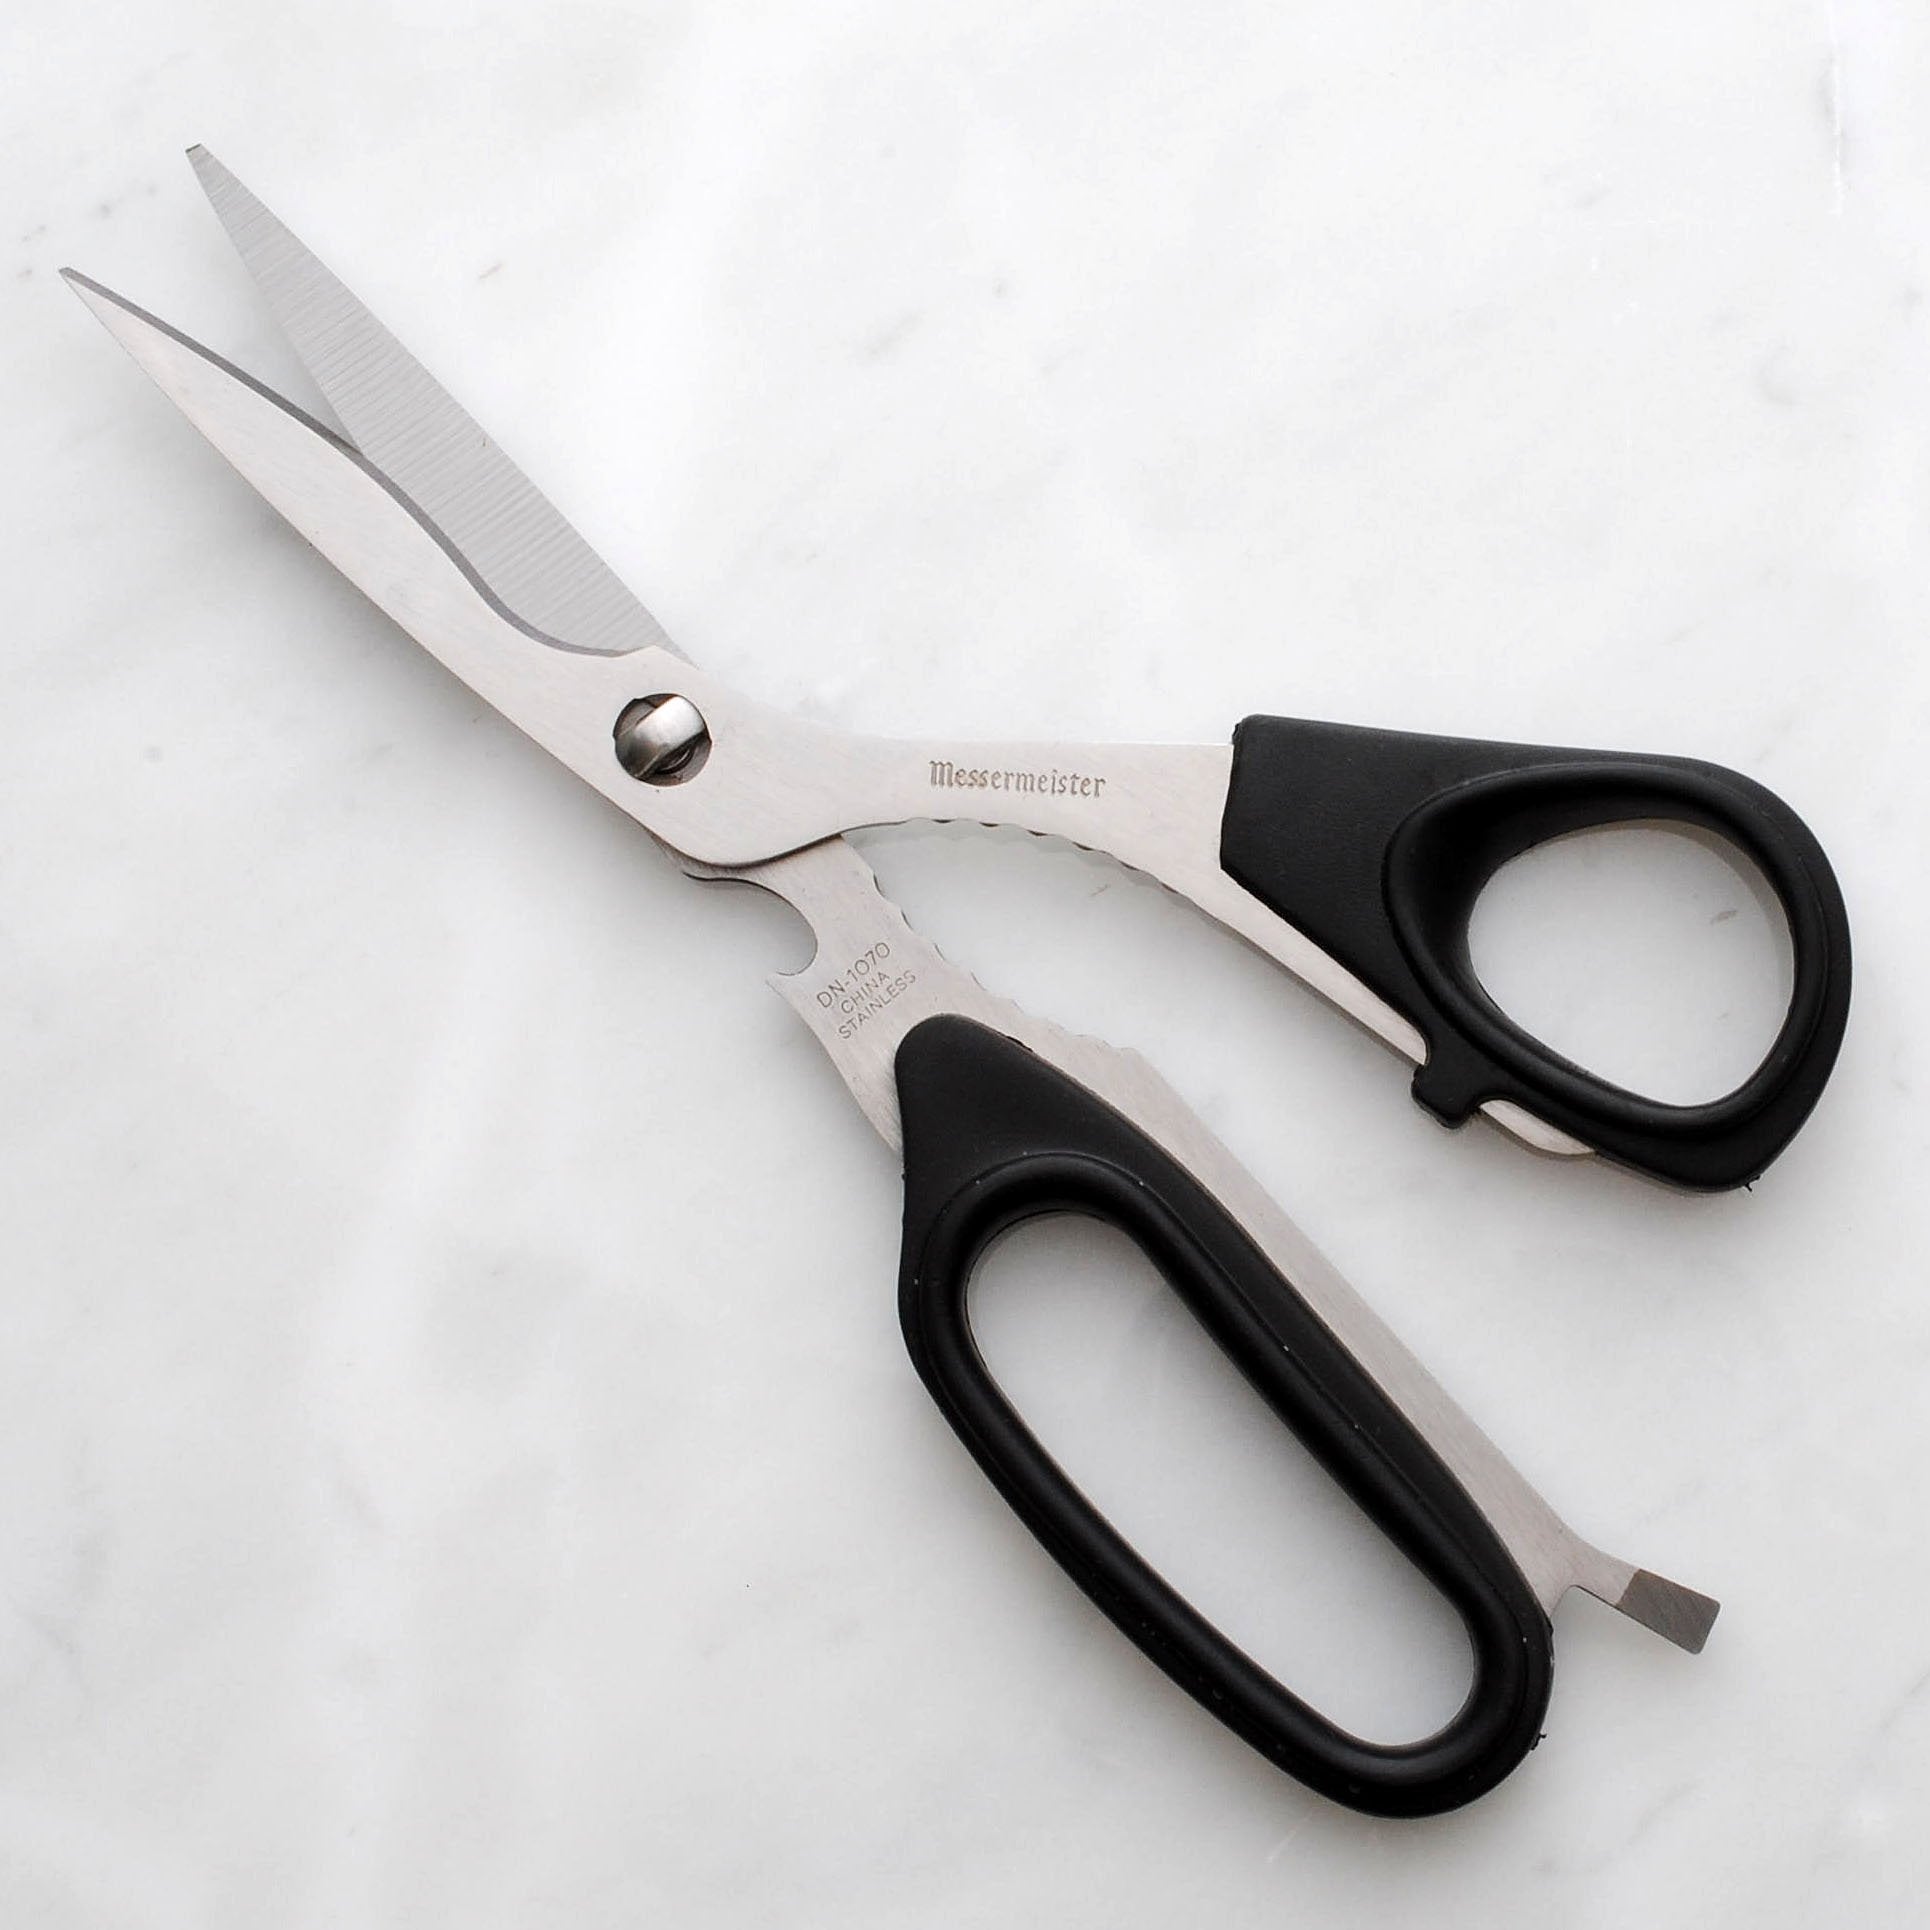 Kai Multi Purpose Shears, Multiple Function Kitchen Scissors